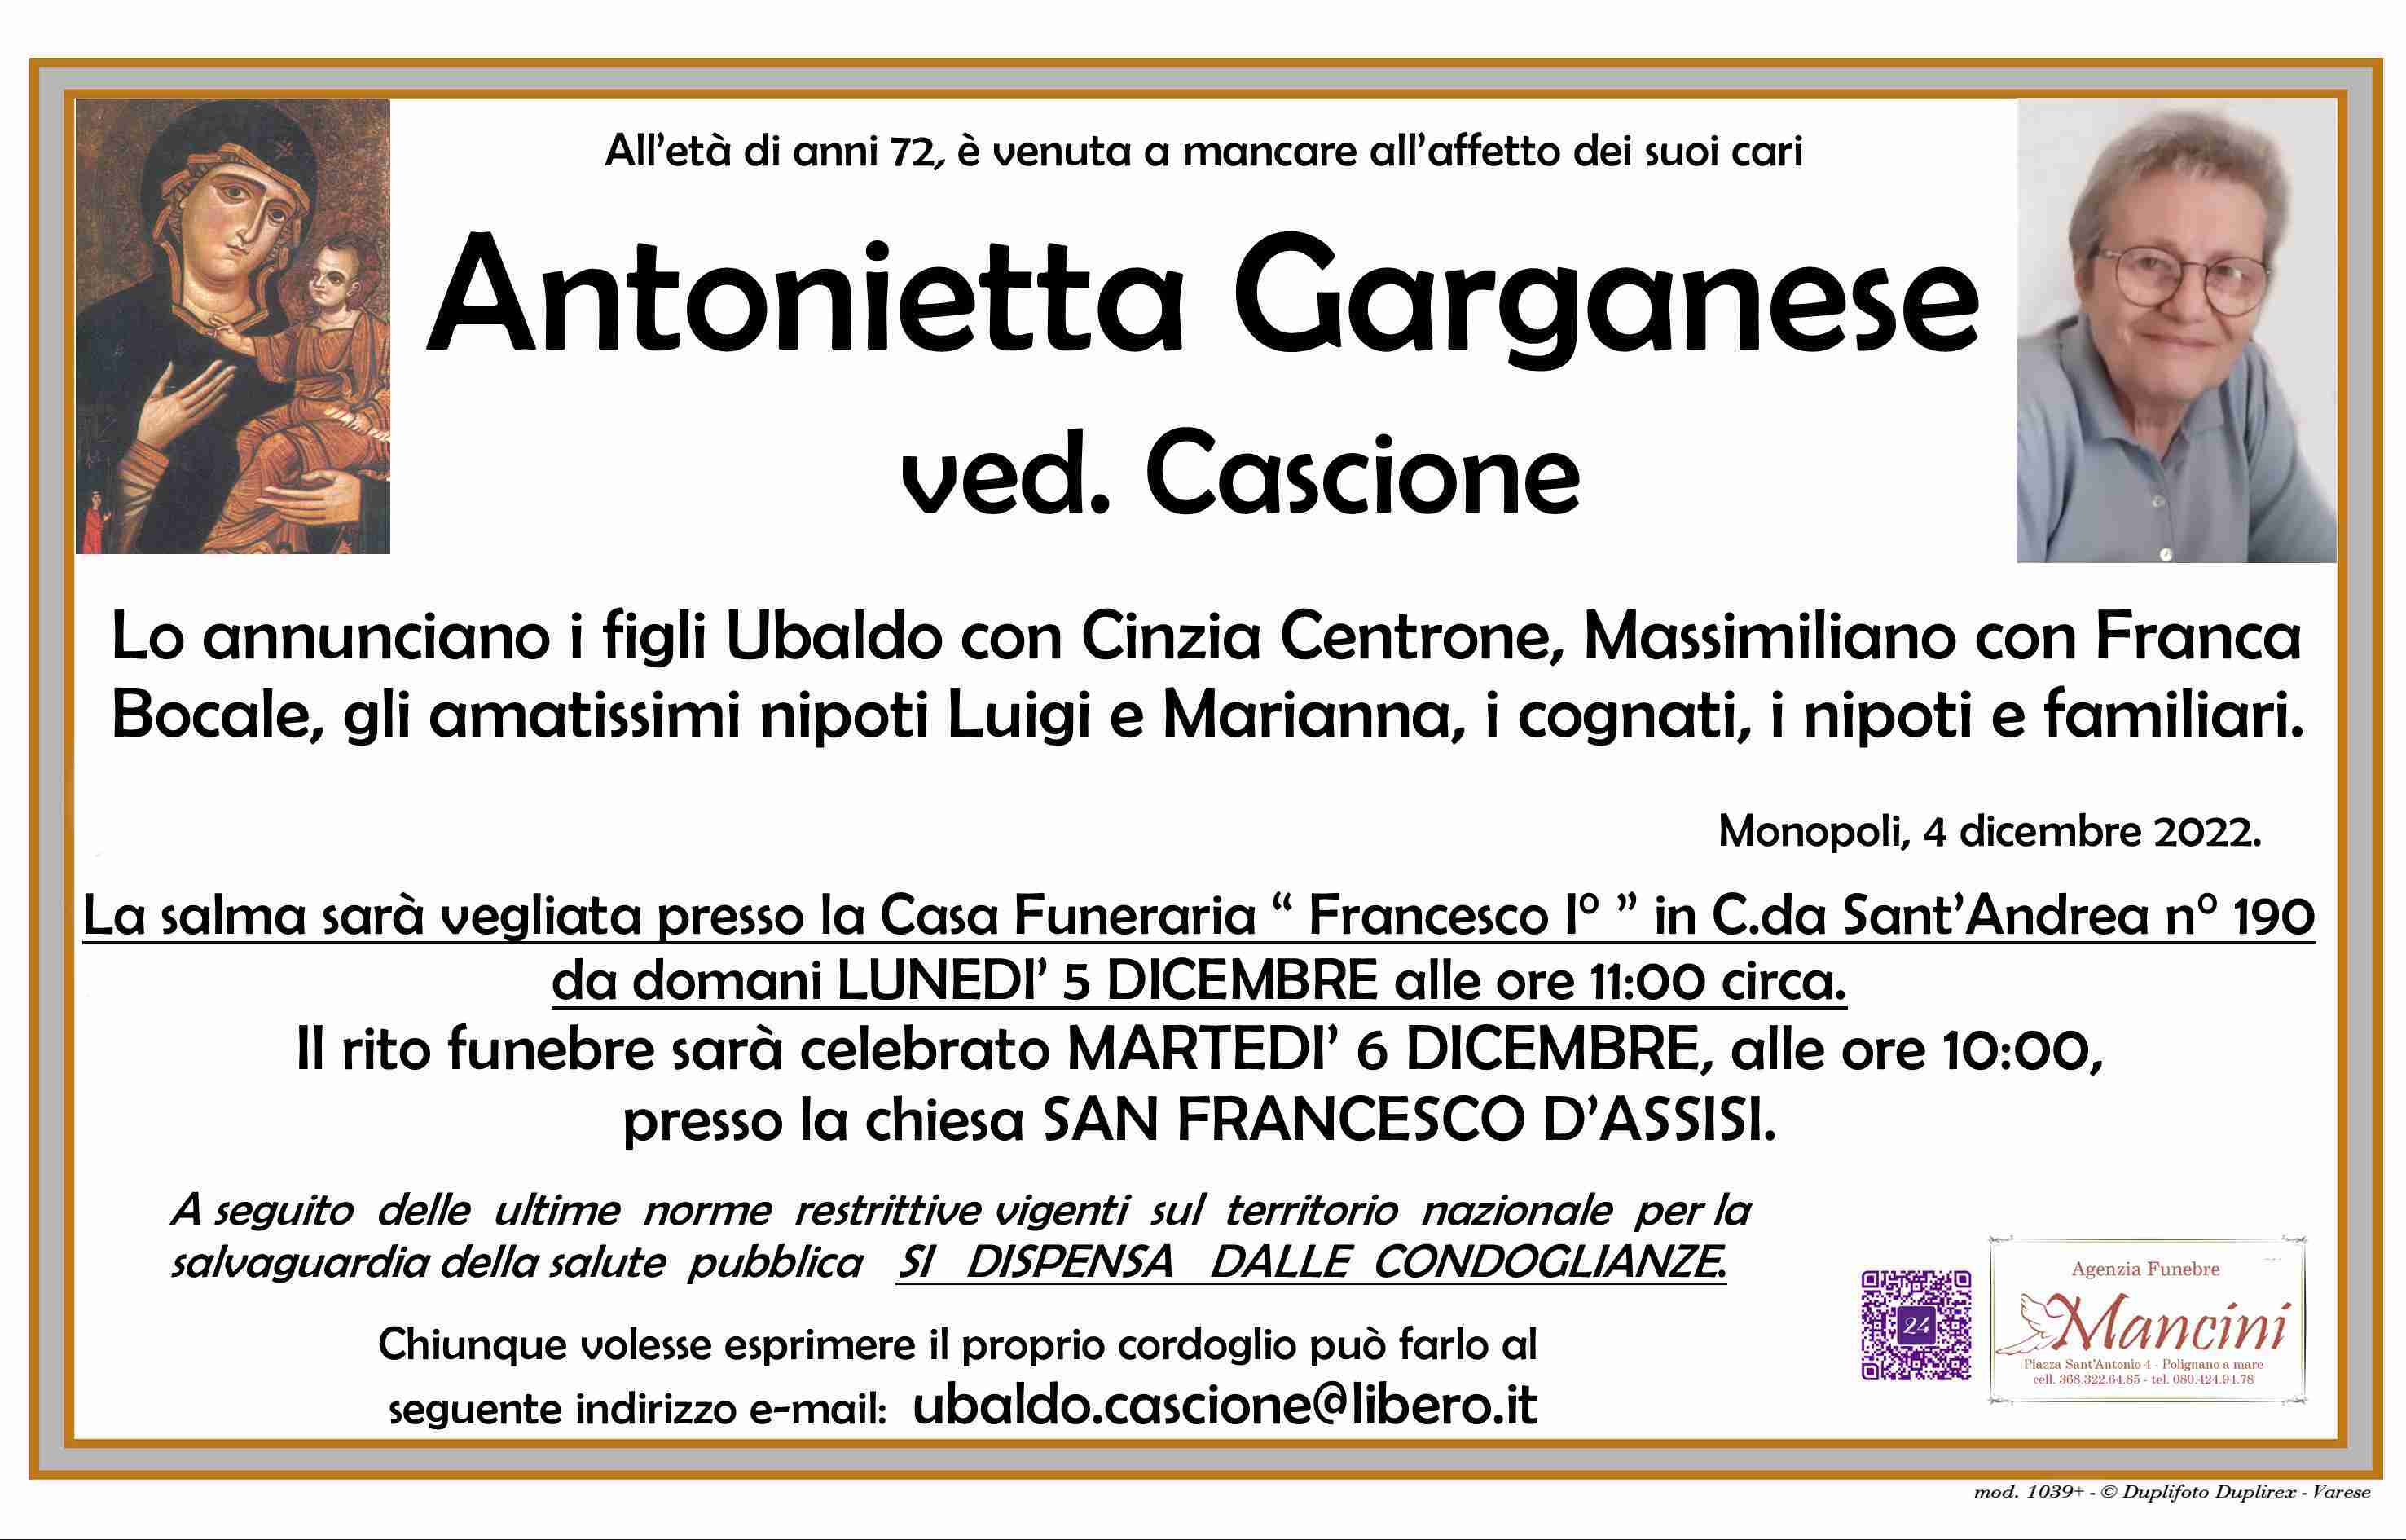 Antonietta Garganese